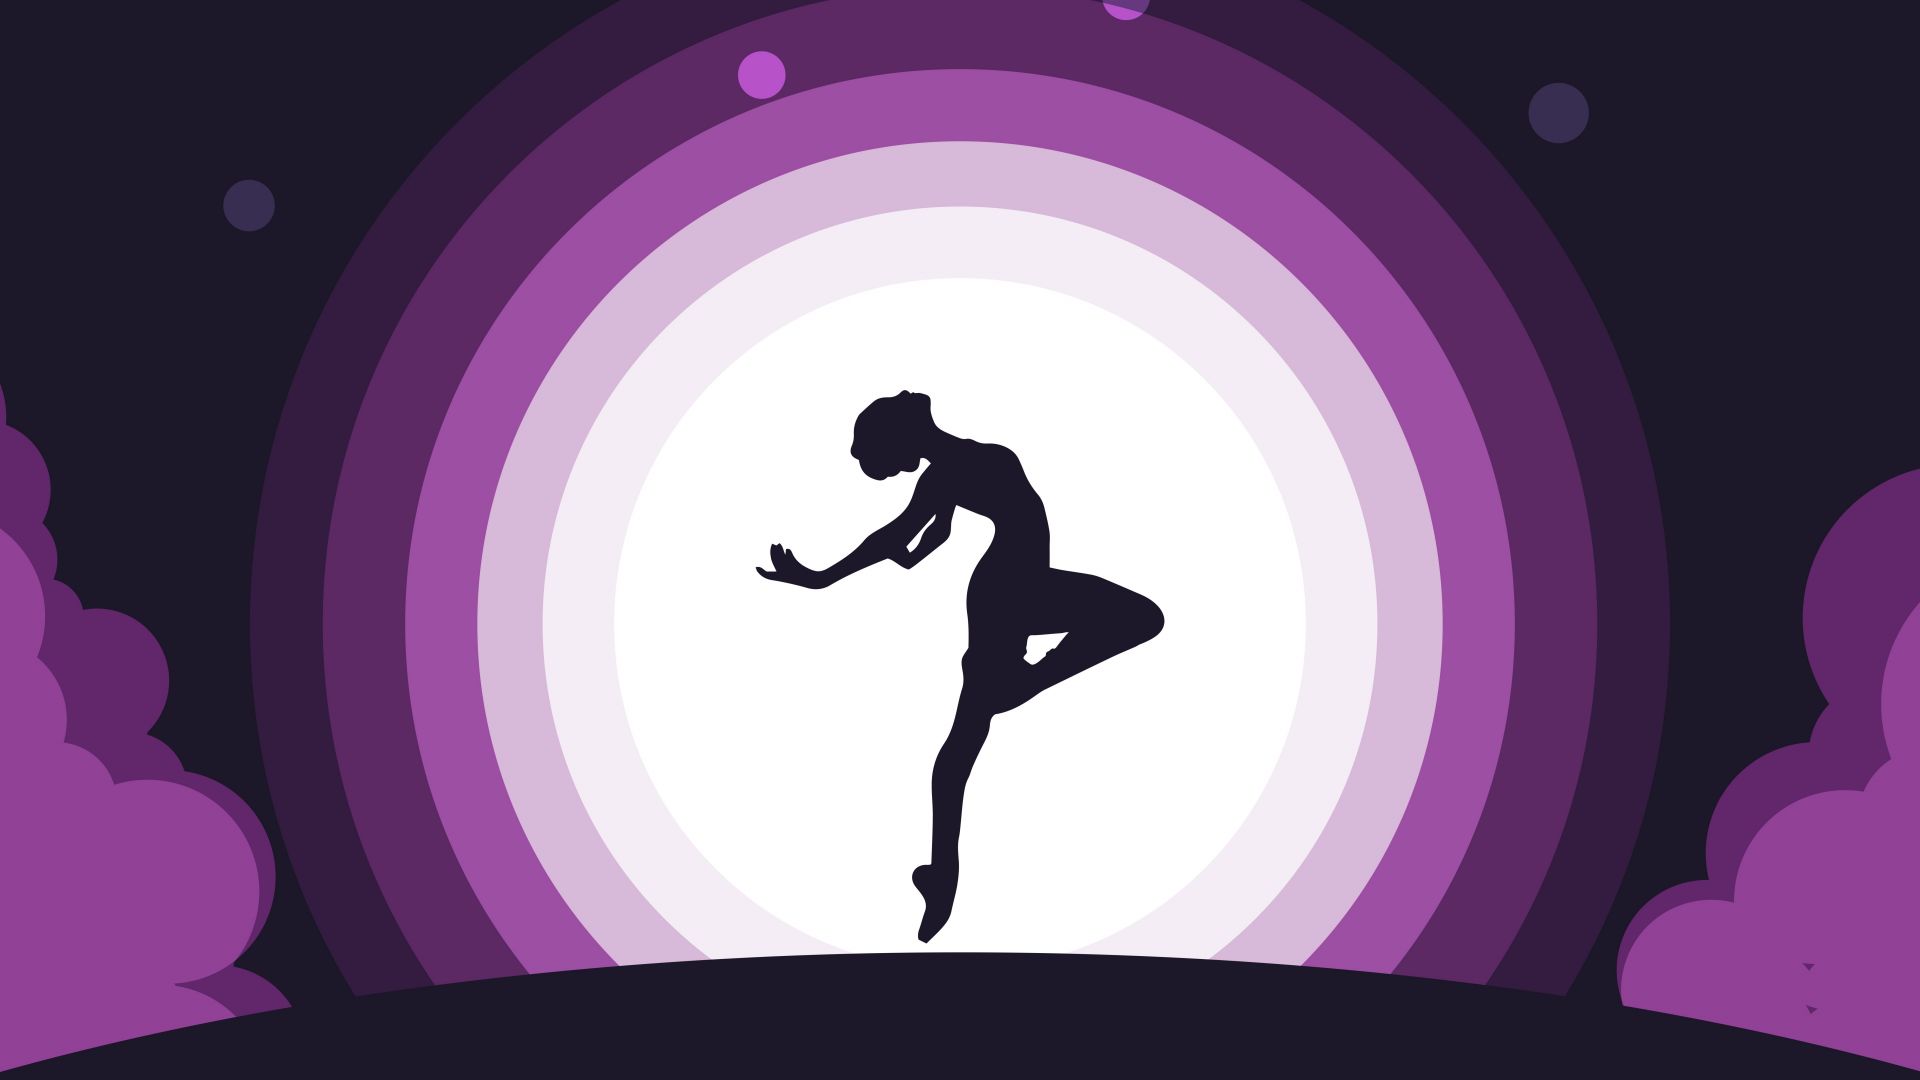 Woman, dance, moon, silhouette, digital art wallpaper, HD image, picture, background, fe23c1